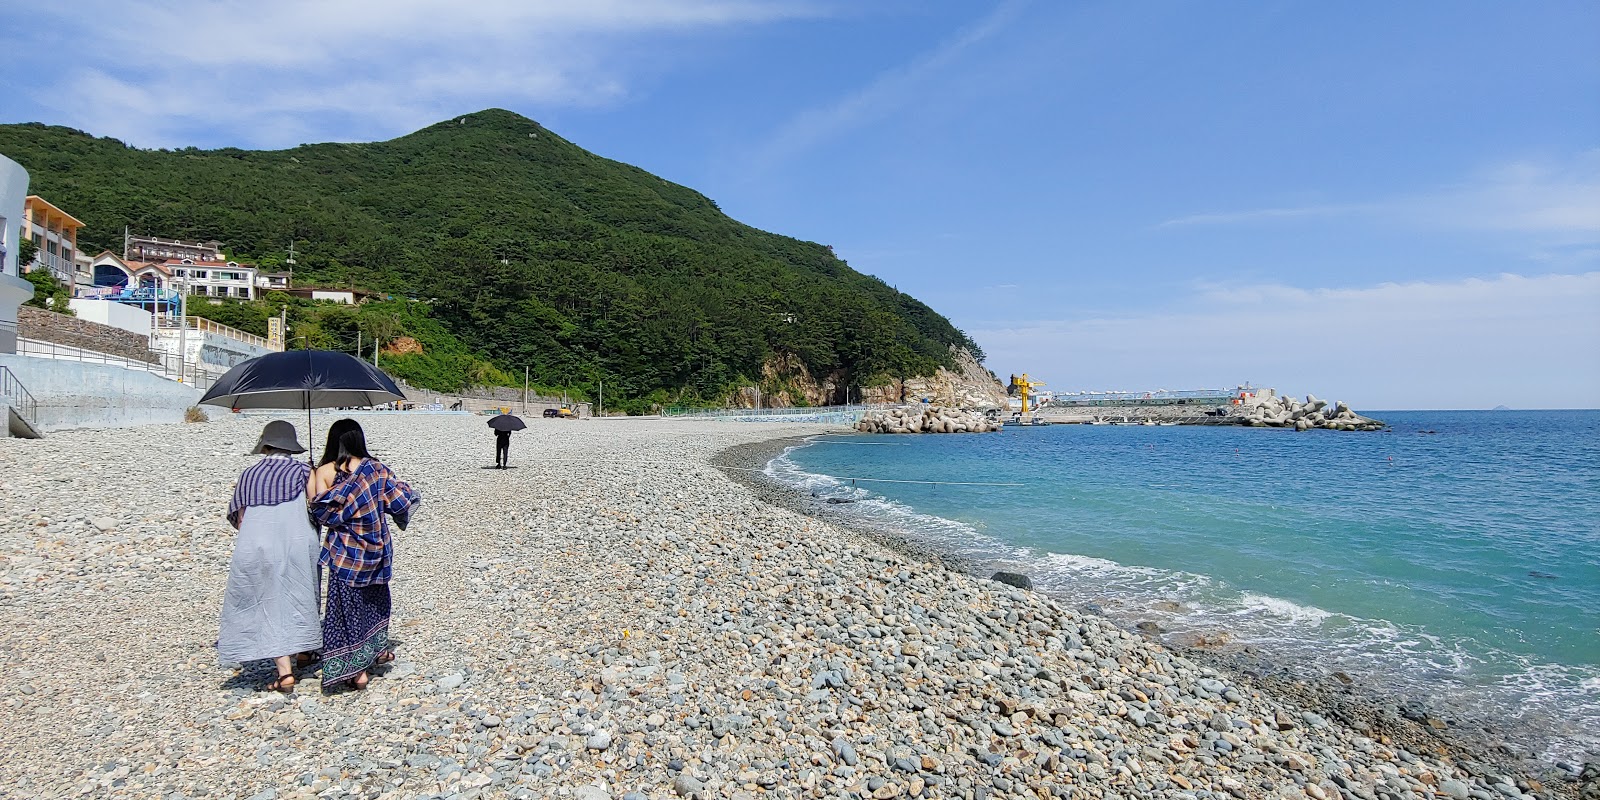 Fotografija Yeocha Beach z sivi kamenček površino